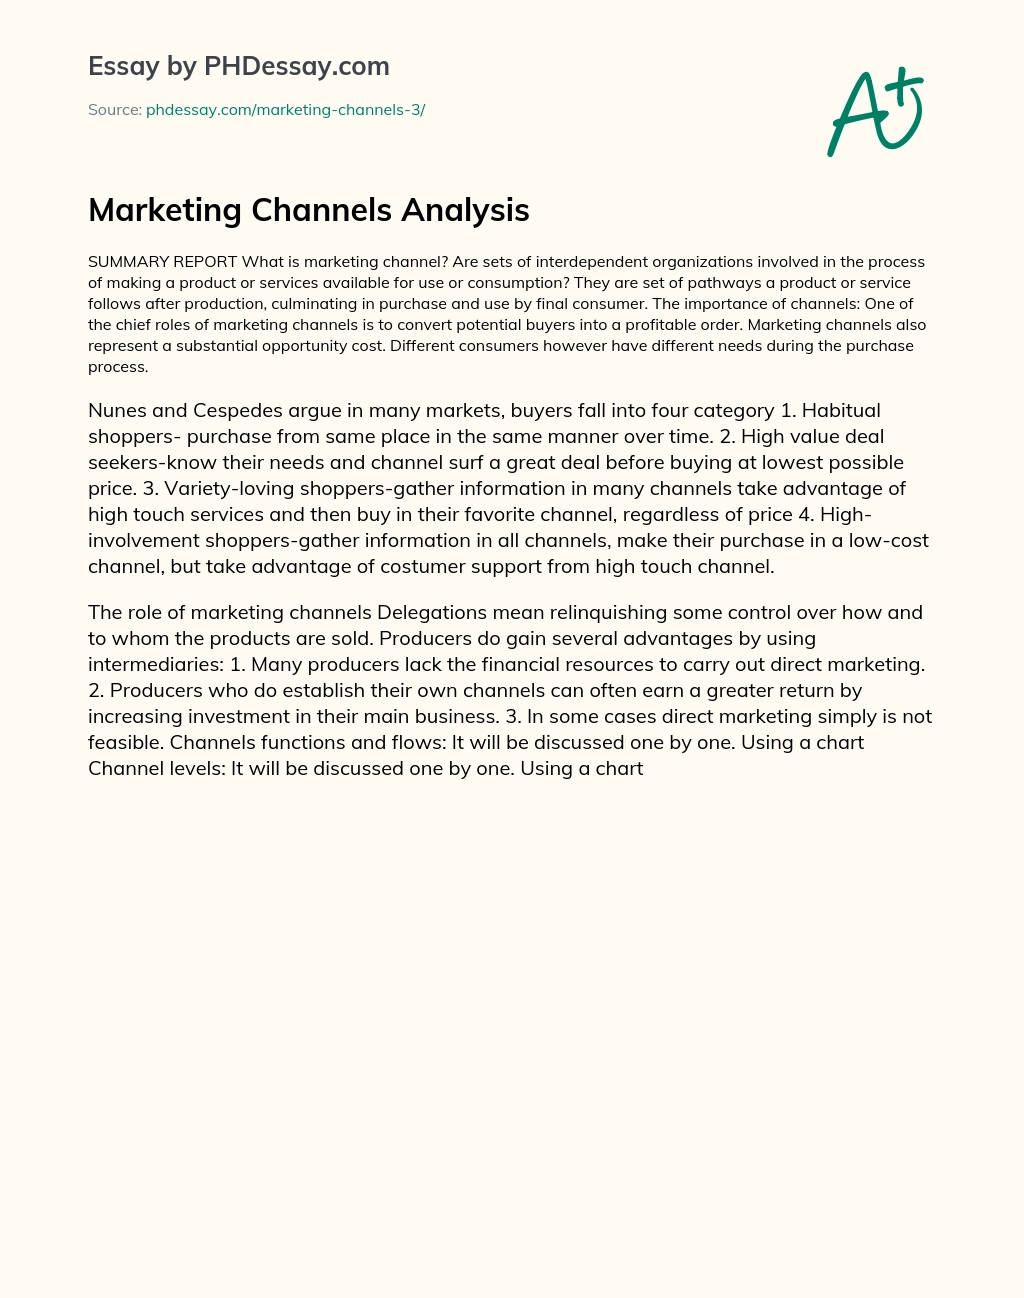 Marketing Channels Analysis essay